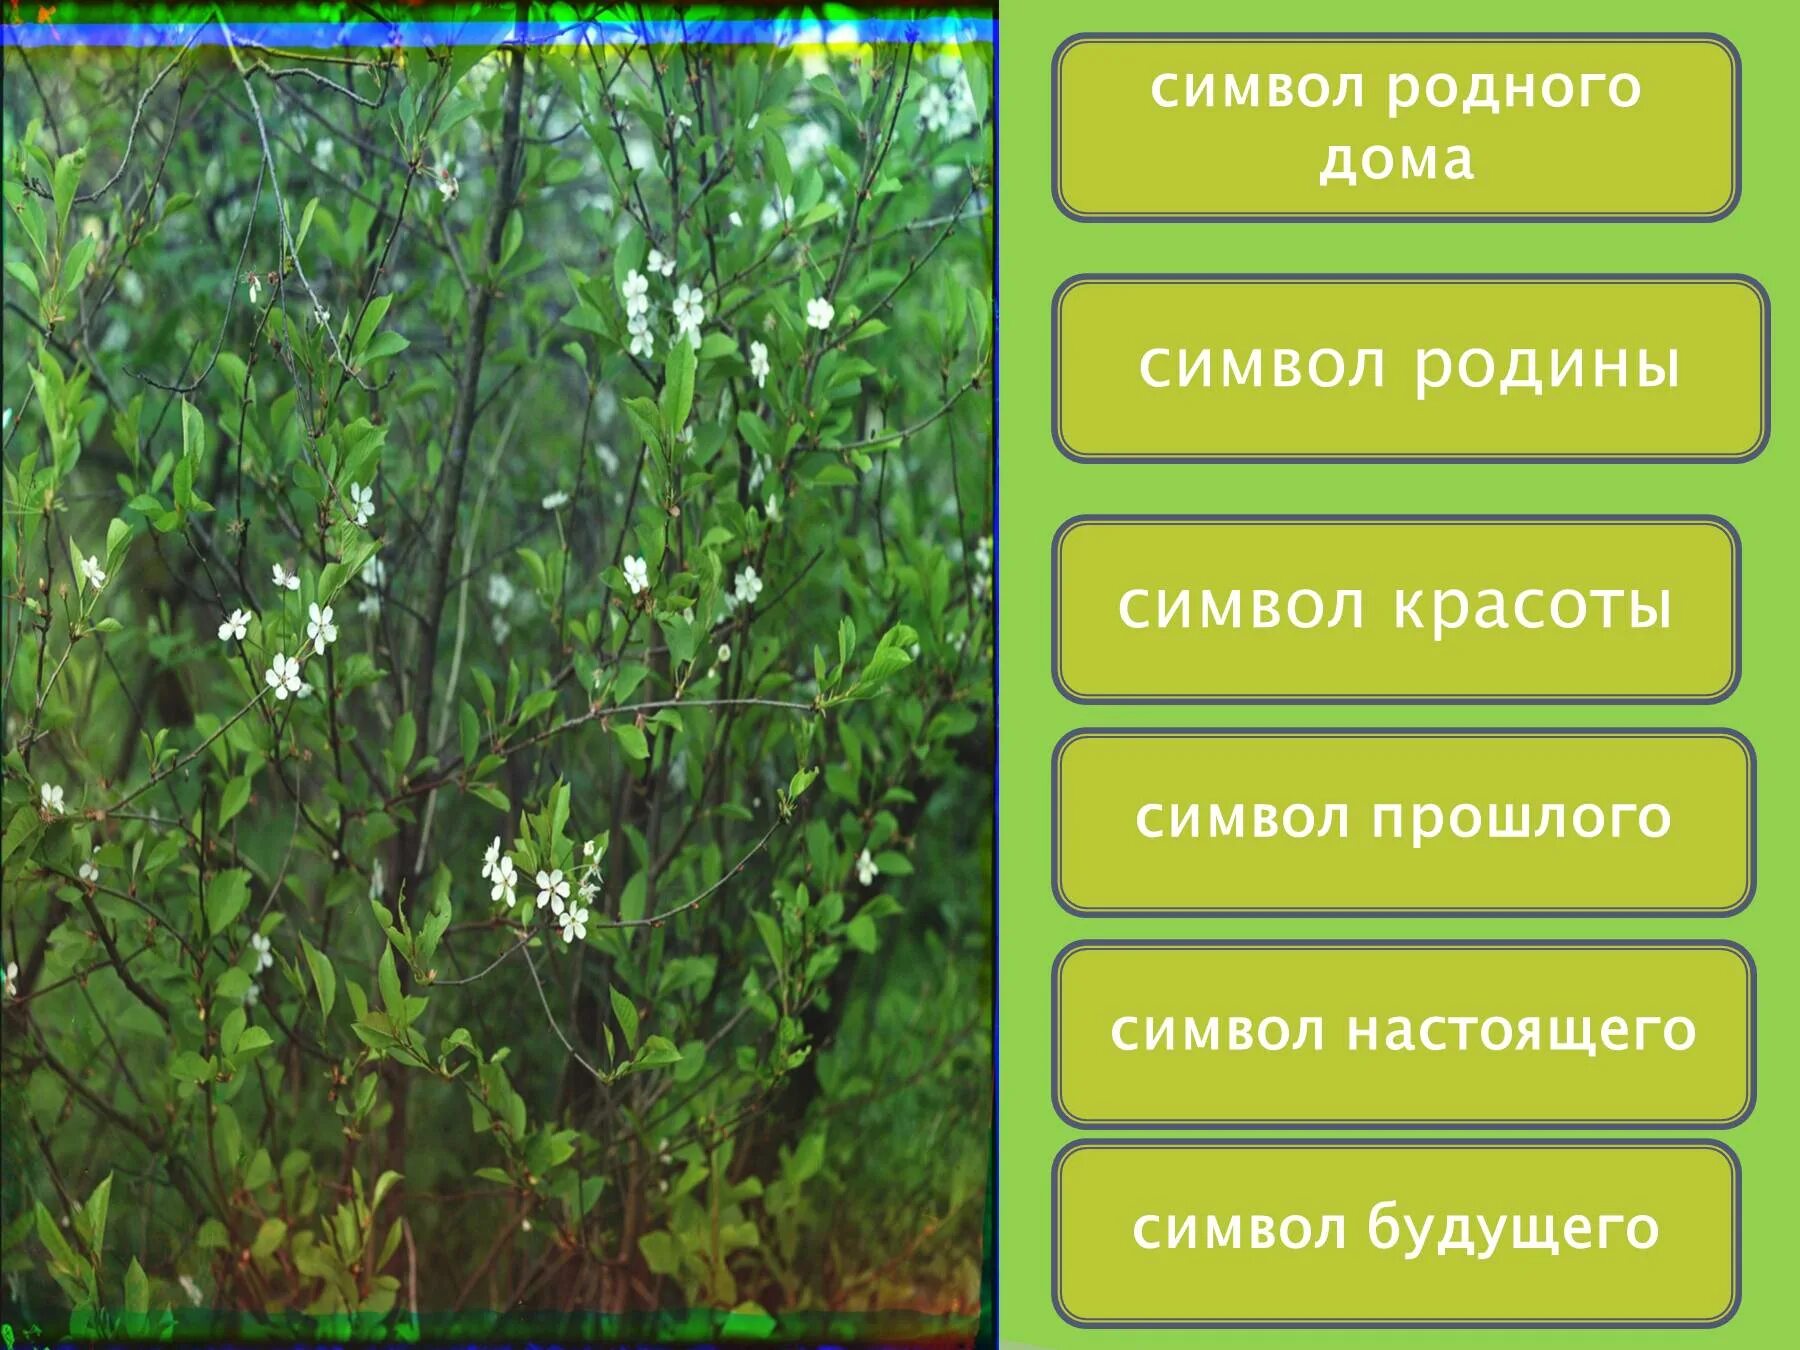 Вишневый сад символ россии. Вишневый сад образ сада. Образ вишневого сада в пьесе Чехова.